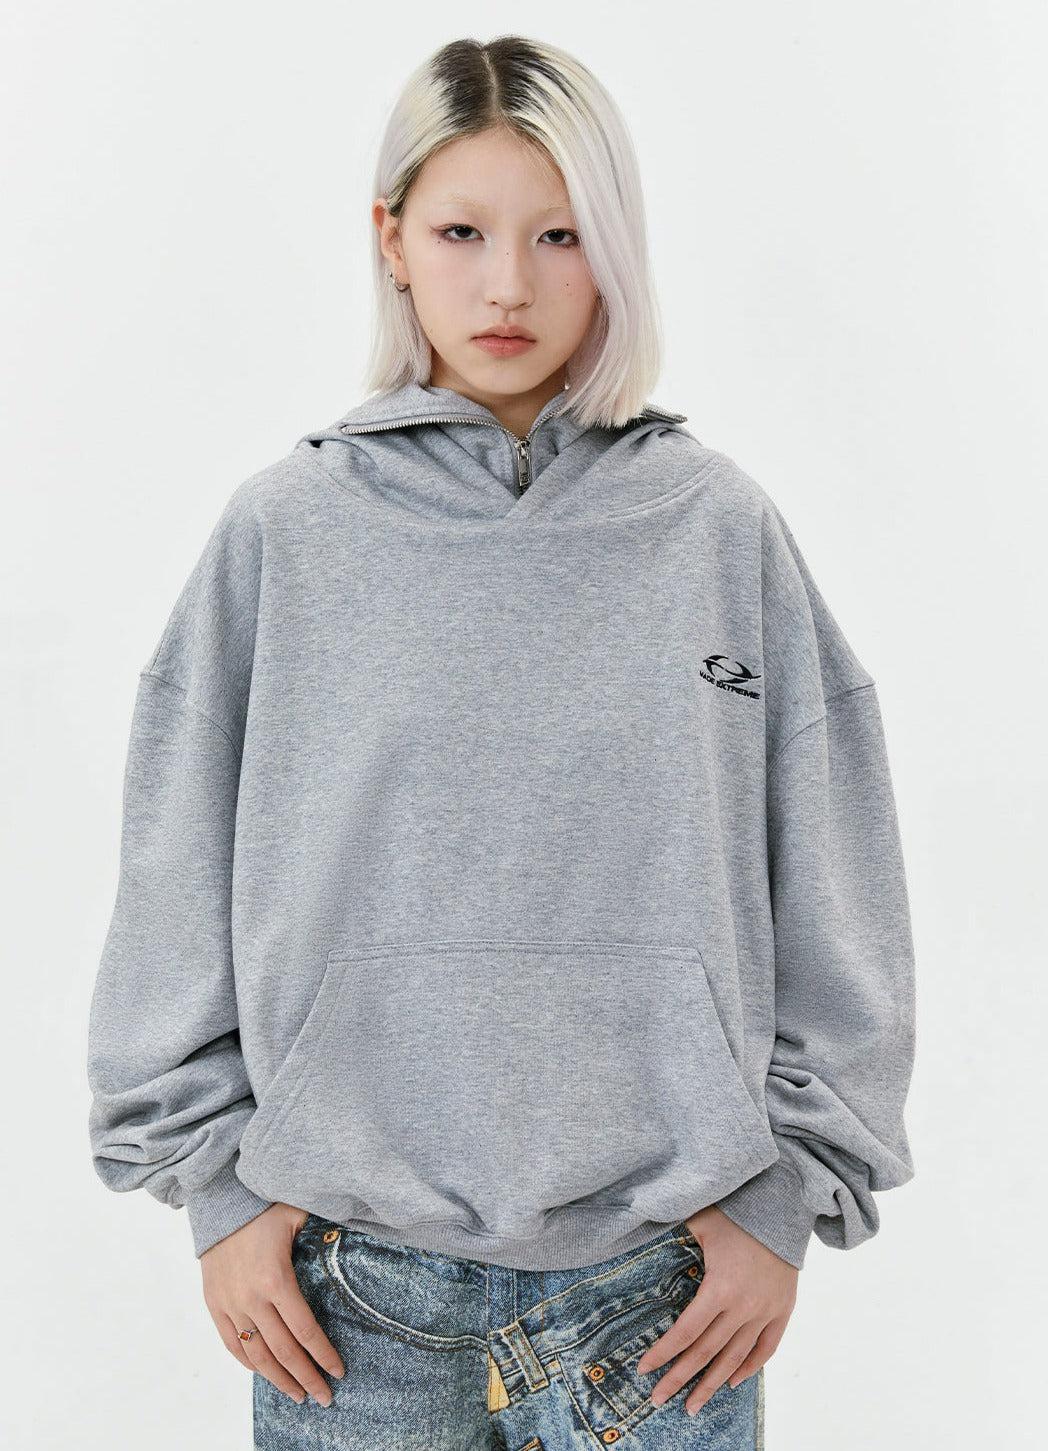 Minimal Logo Ninja Style Hoodie Korean Street Fashion Hoodie By Made Extreme Shop Online at OH Vault